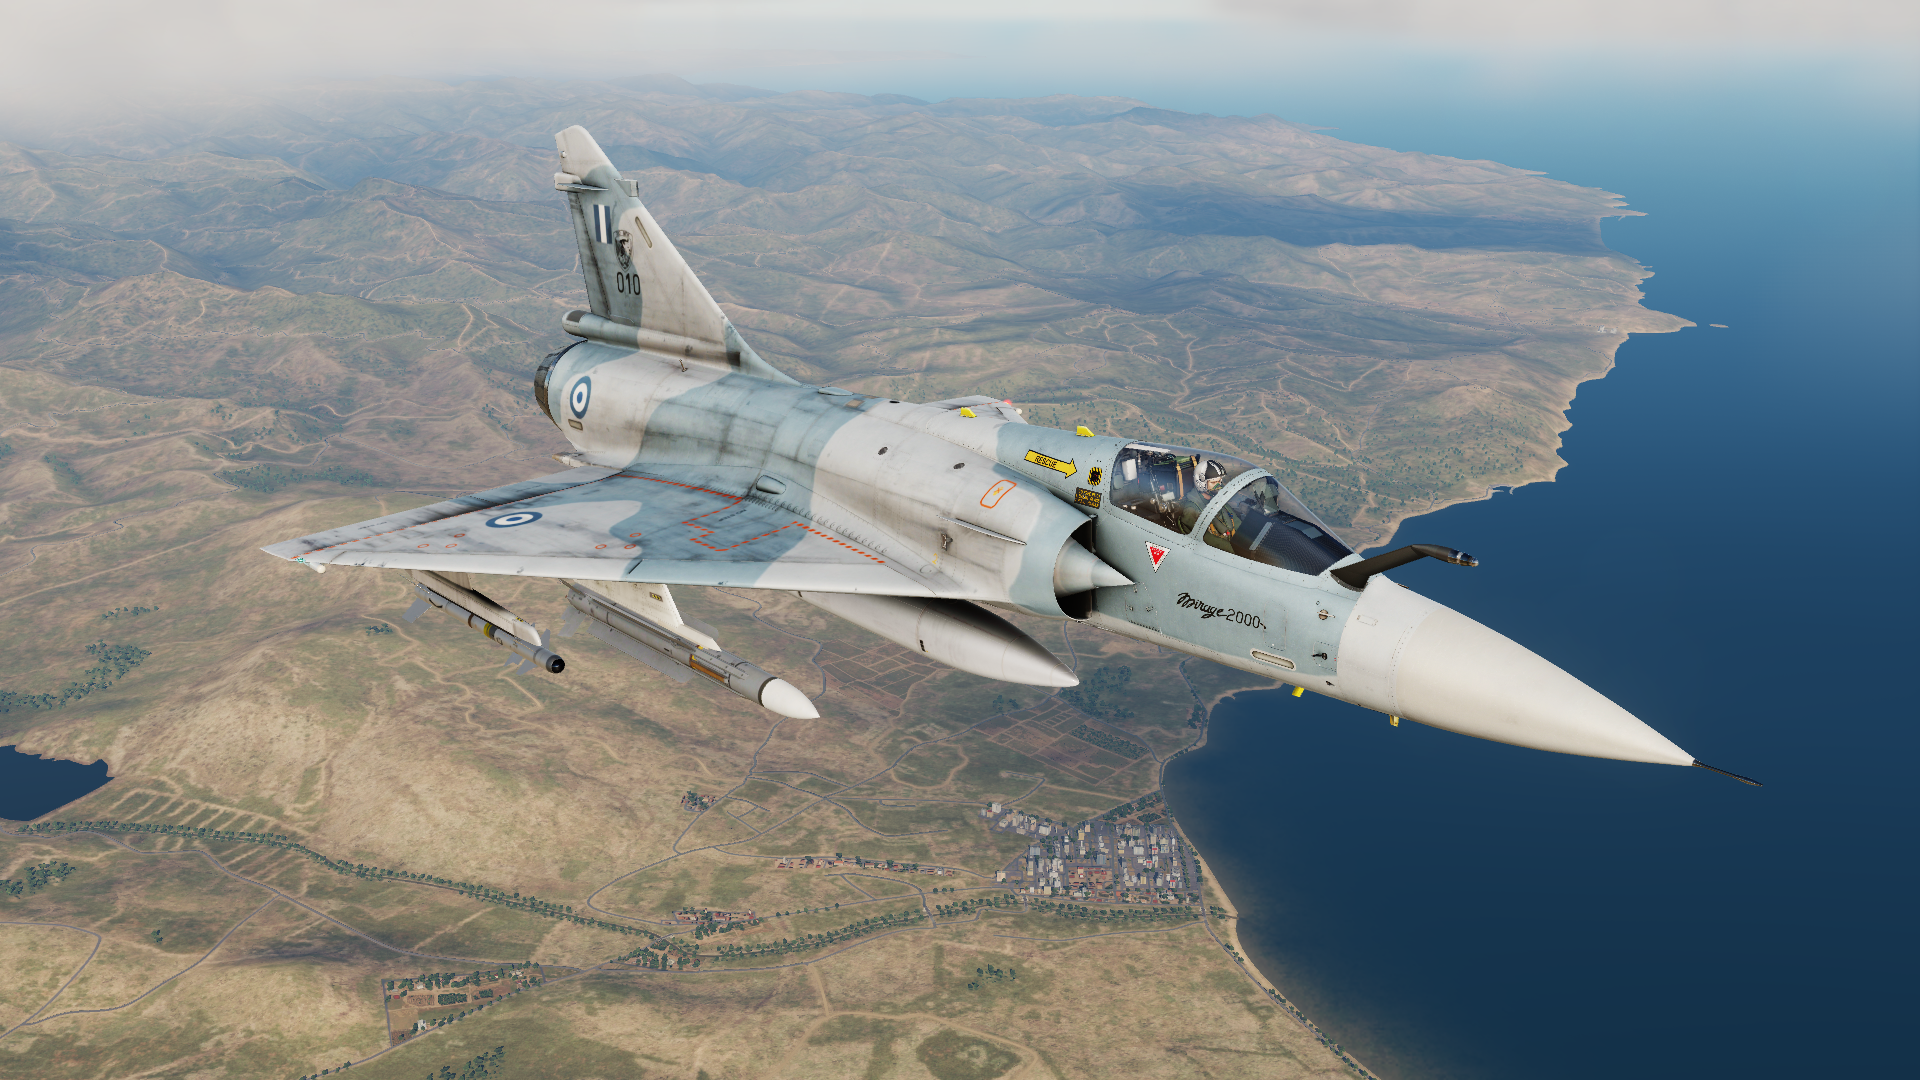 Digital Combat Simulator Dcs World Mirage 2000 Aircraft Airplane Video Games 1920x1080